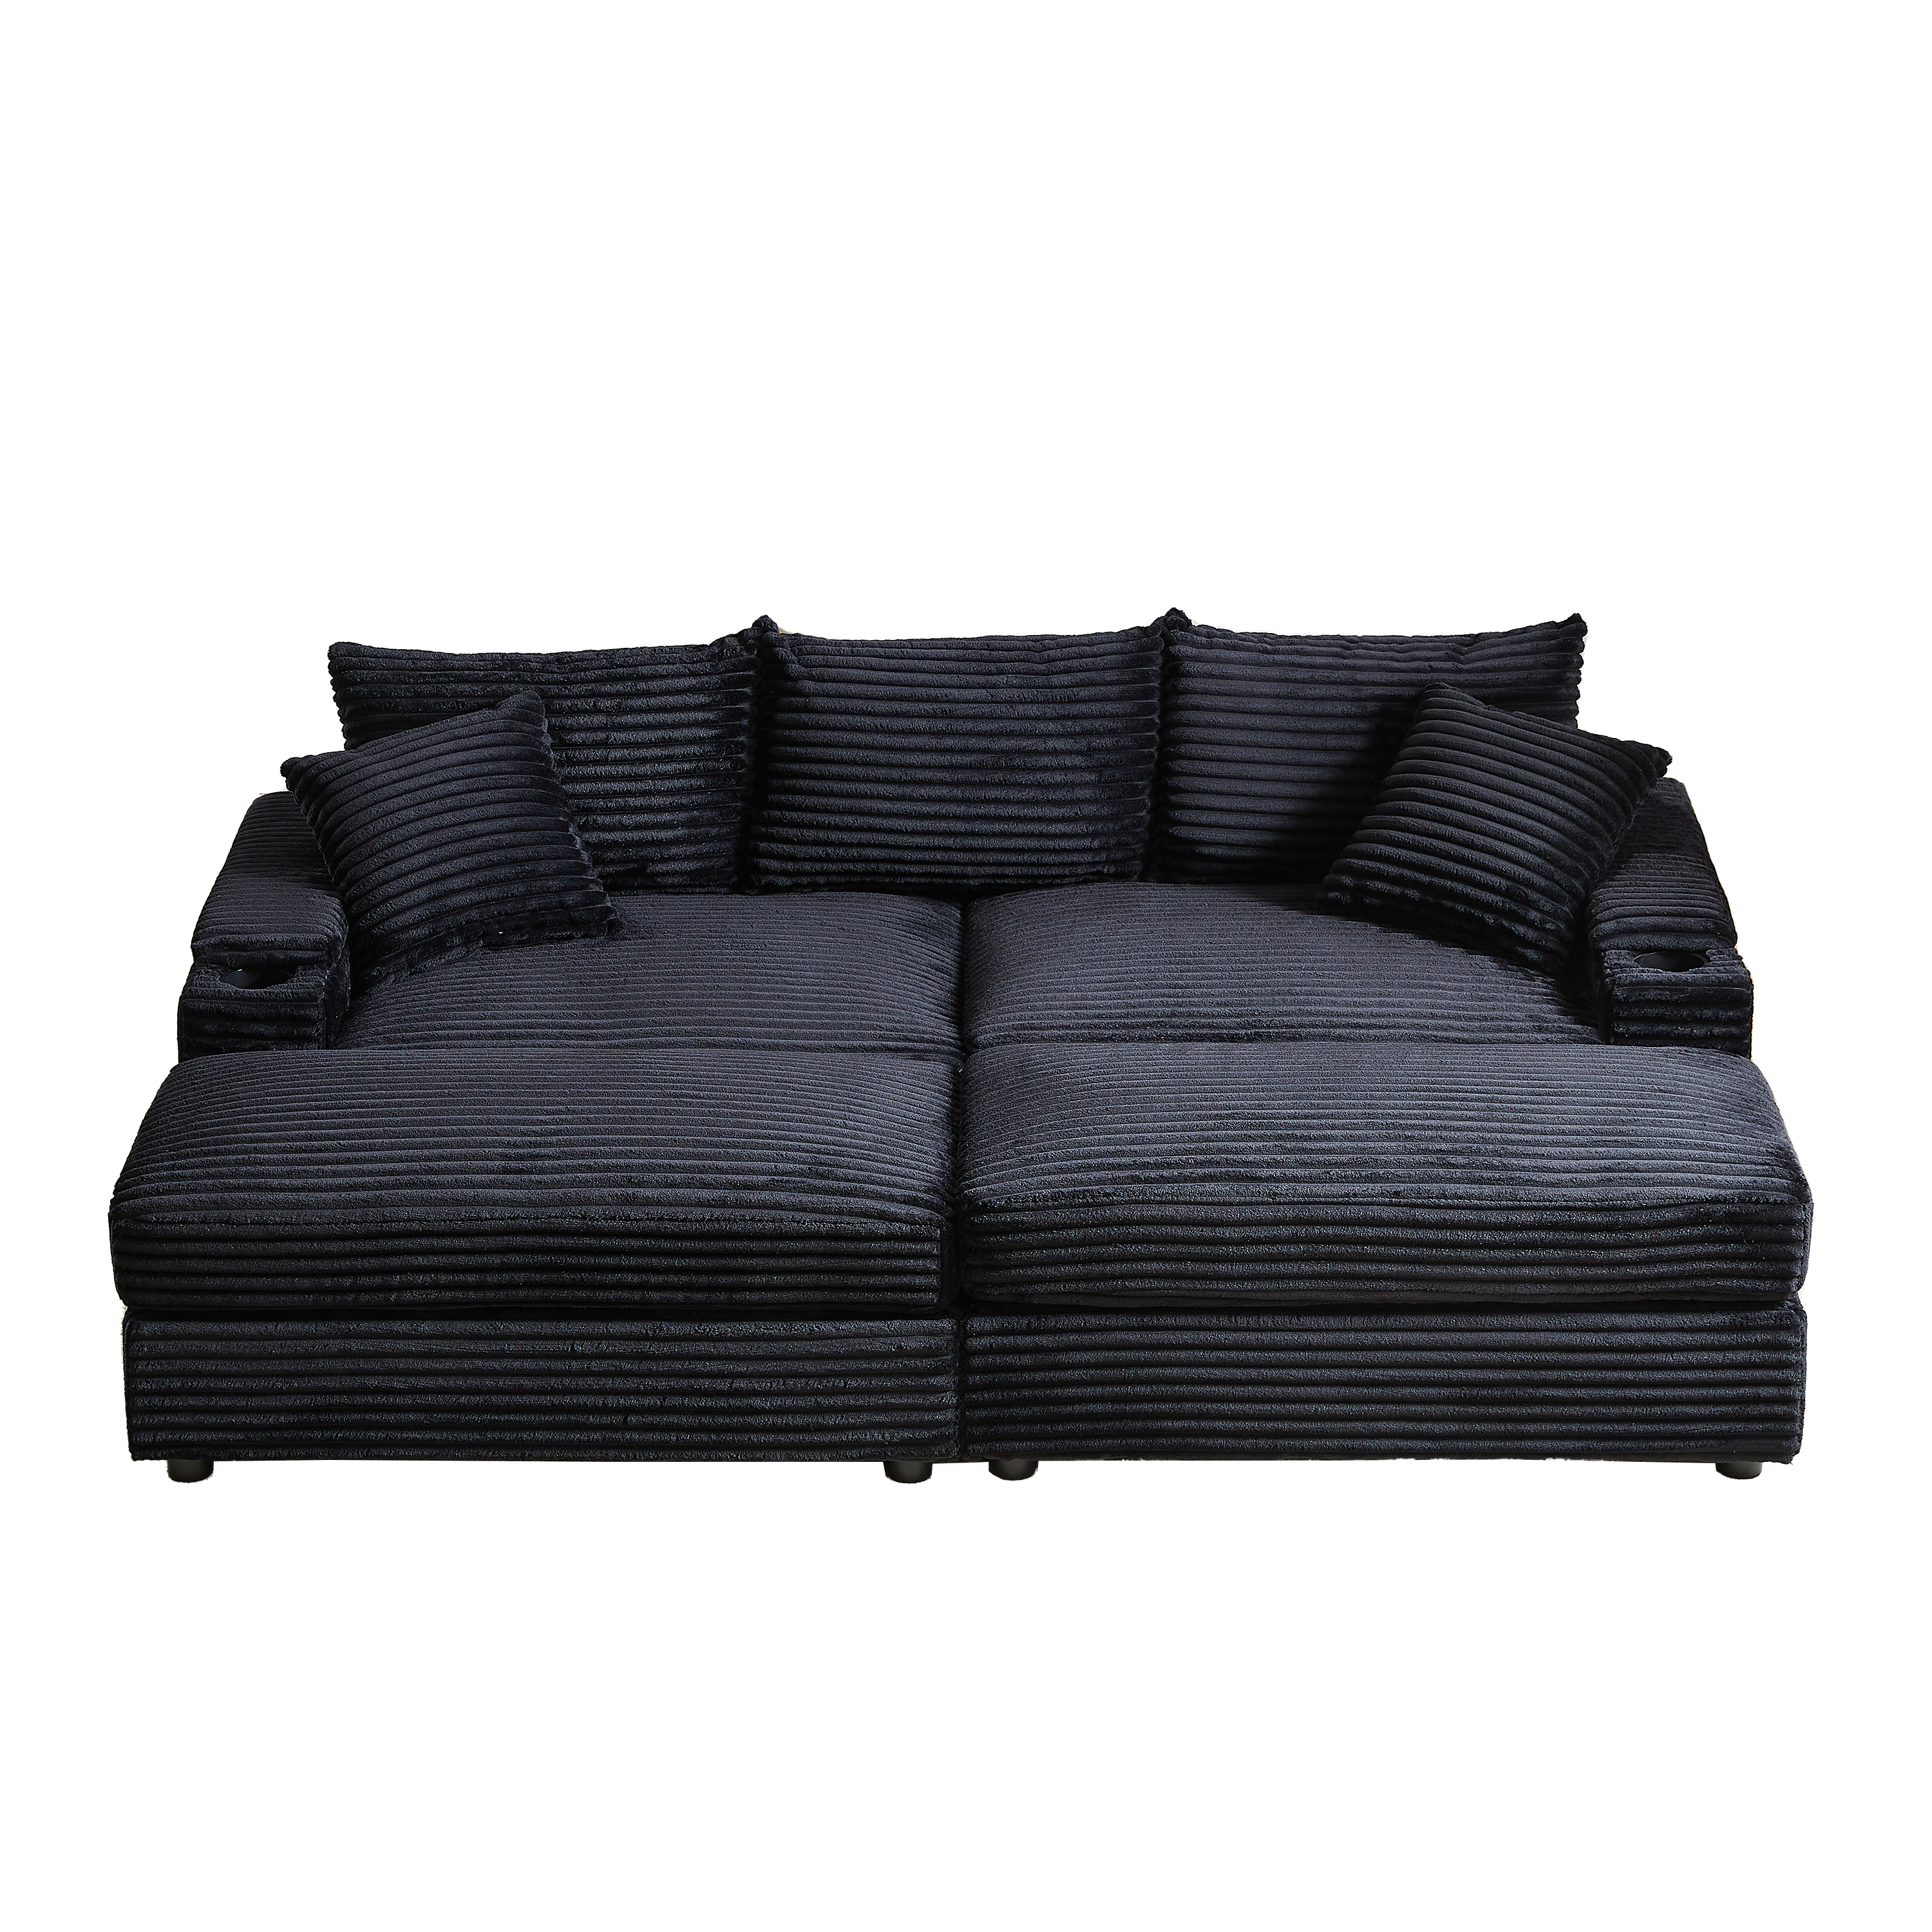 3-seater sofa With 3 back pillows ,2 toss pillows